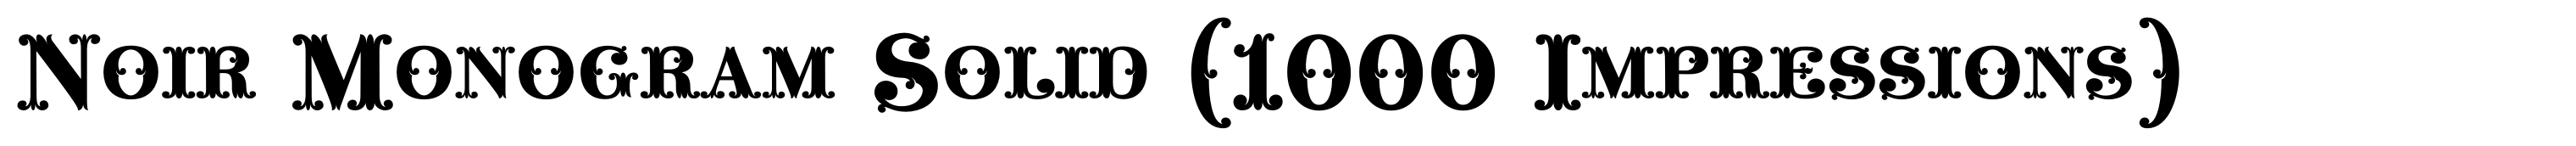 Noir Monogram Solid (1000 Impressions)